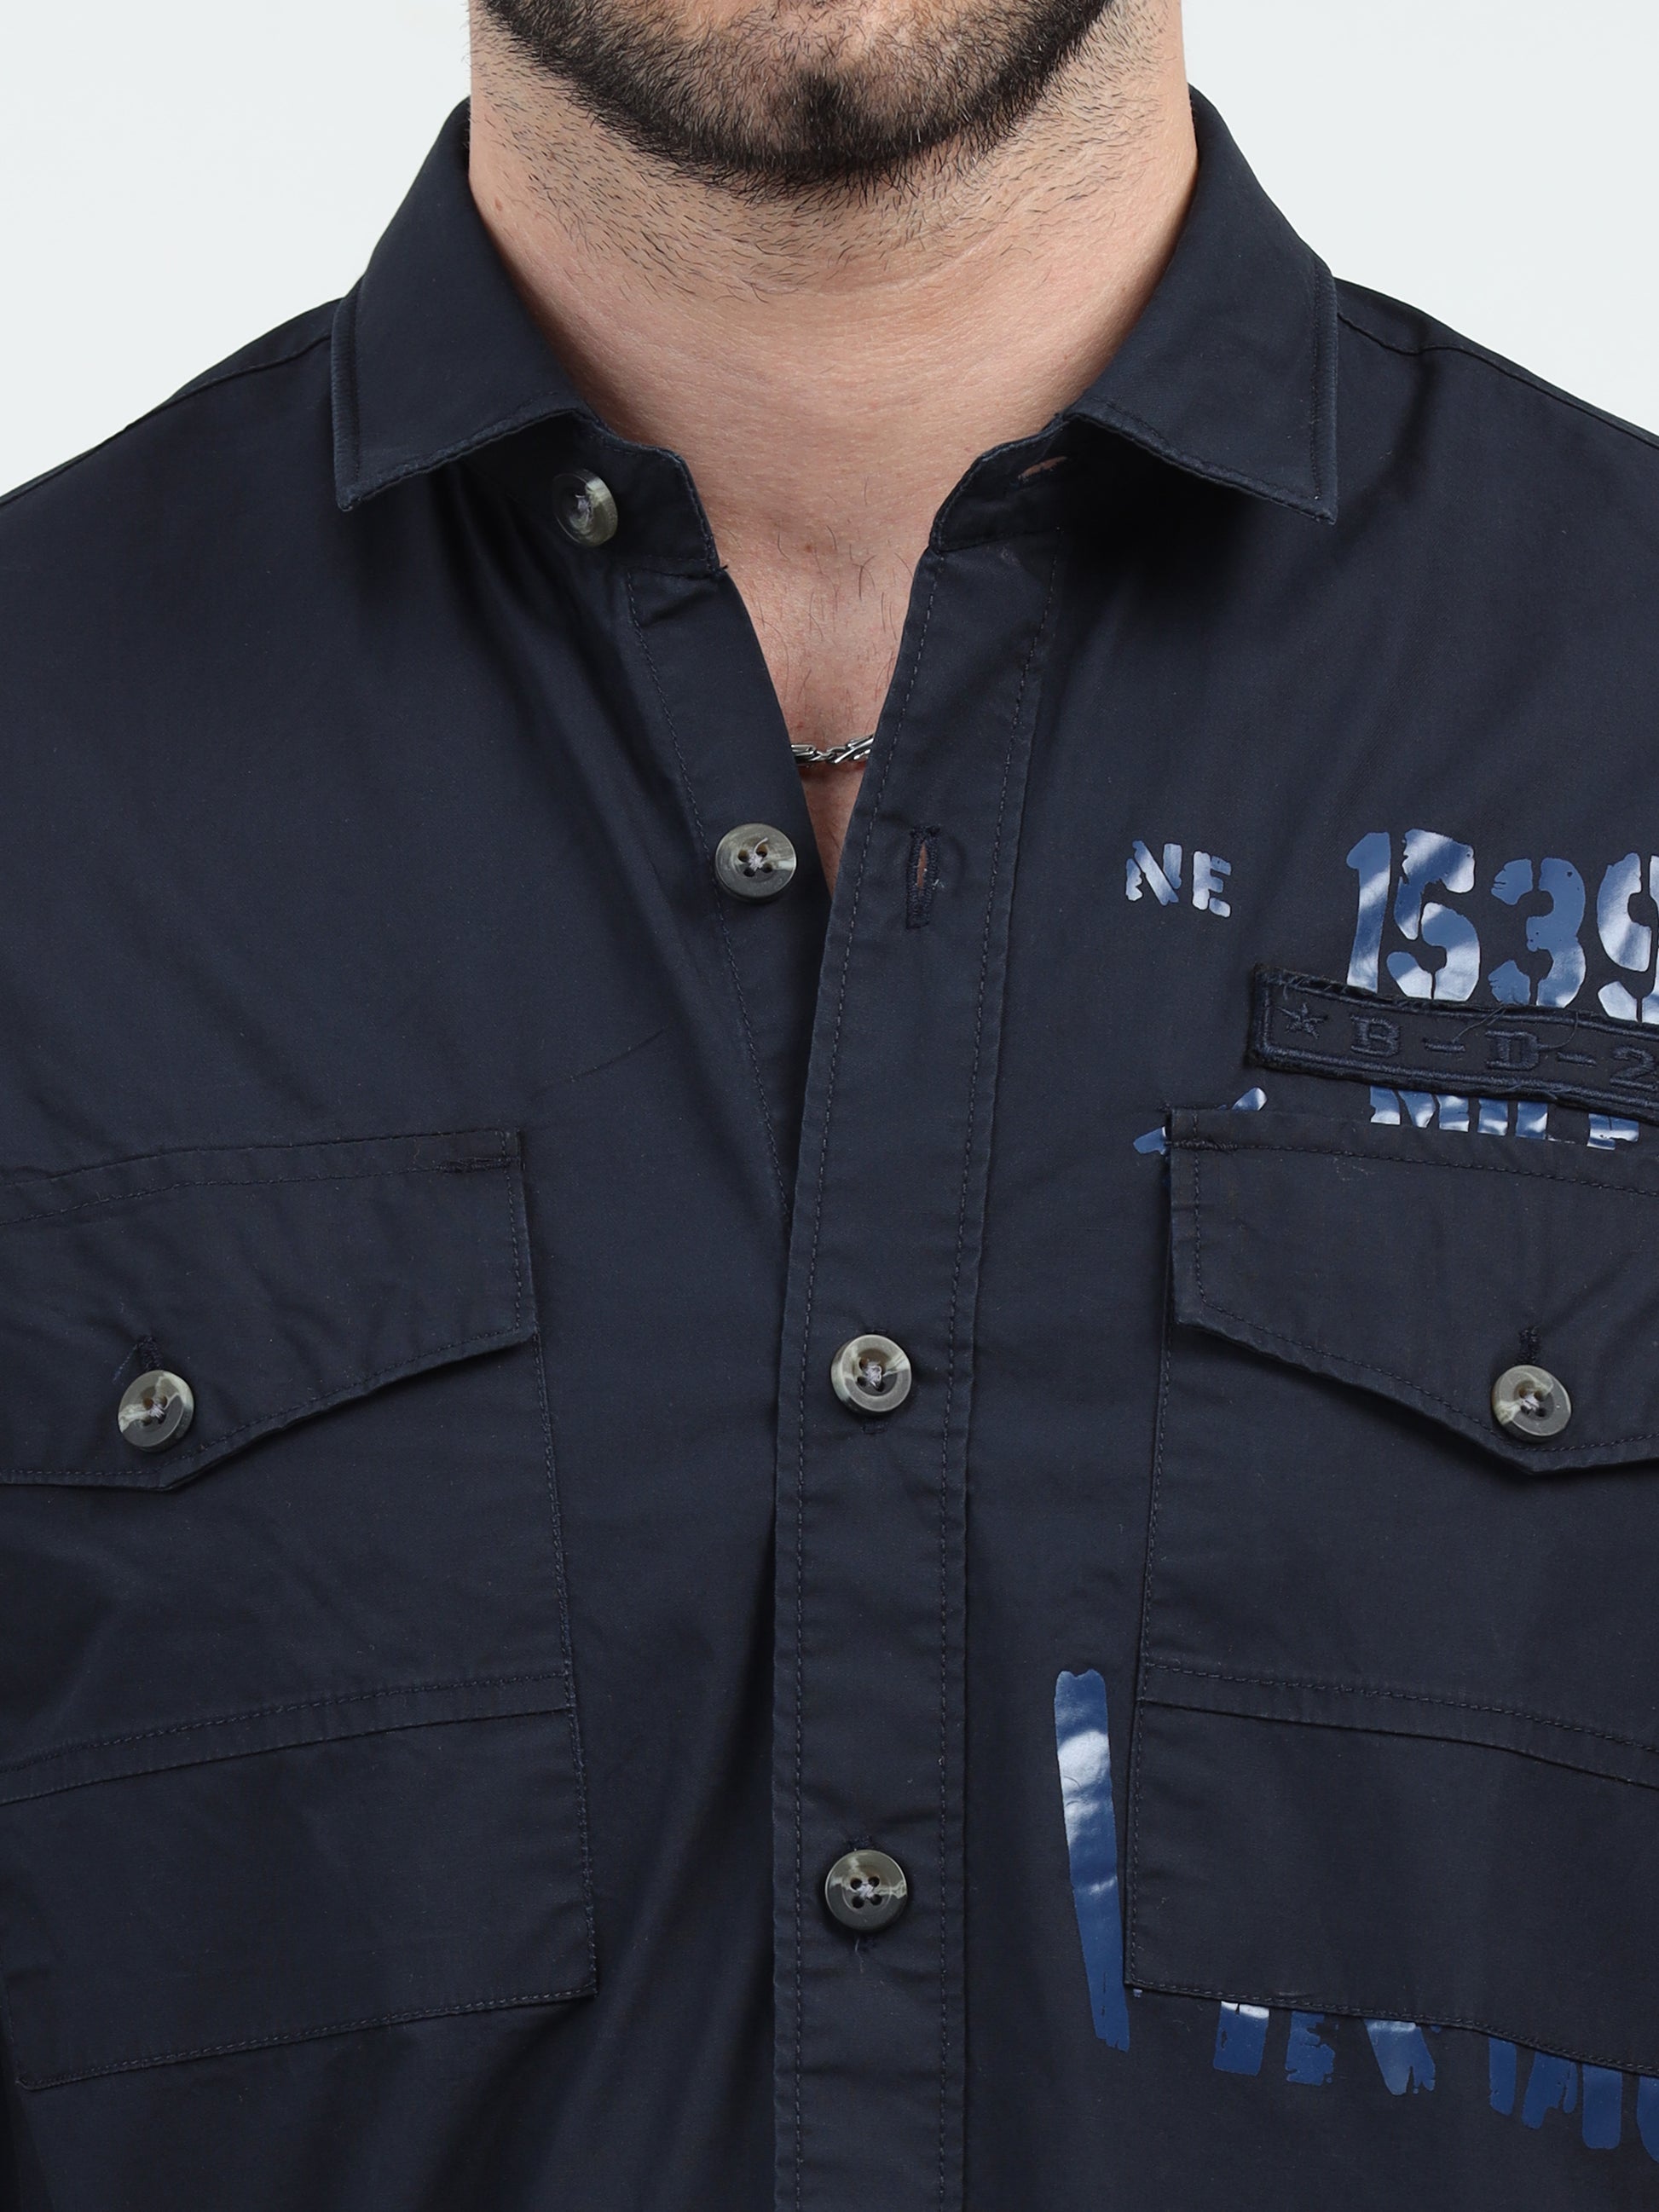 Navy Blue Double Pocket Cargo Shirt for Men 